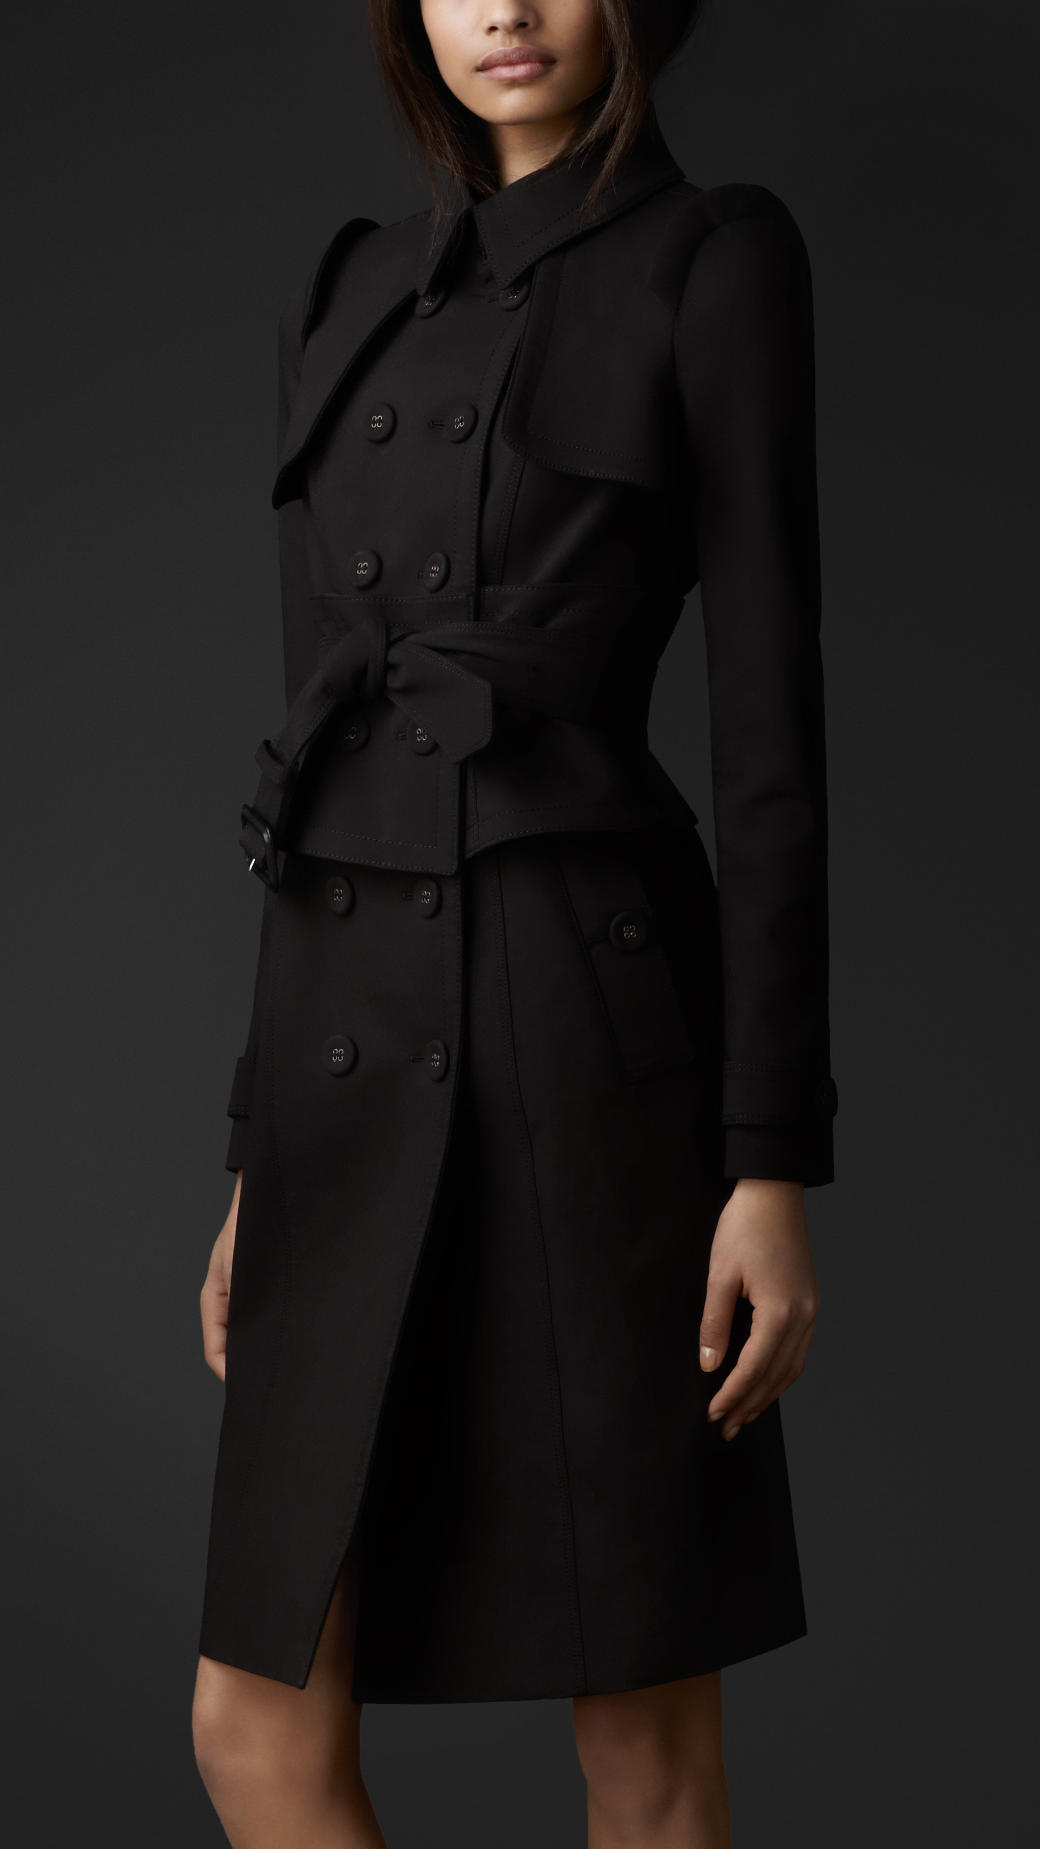 Lyst - Burberry Prorsum Corset Trench Coat in Black